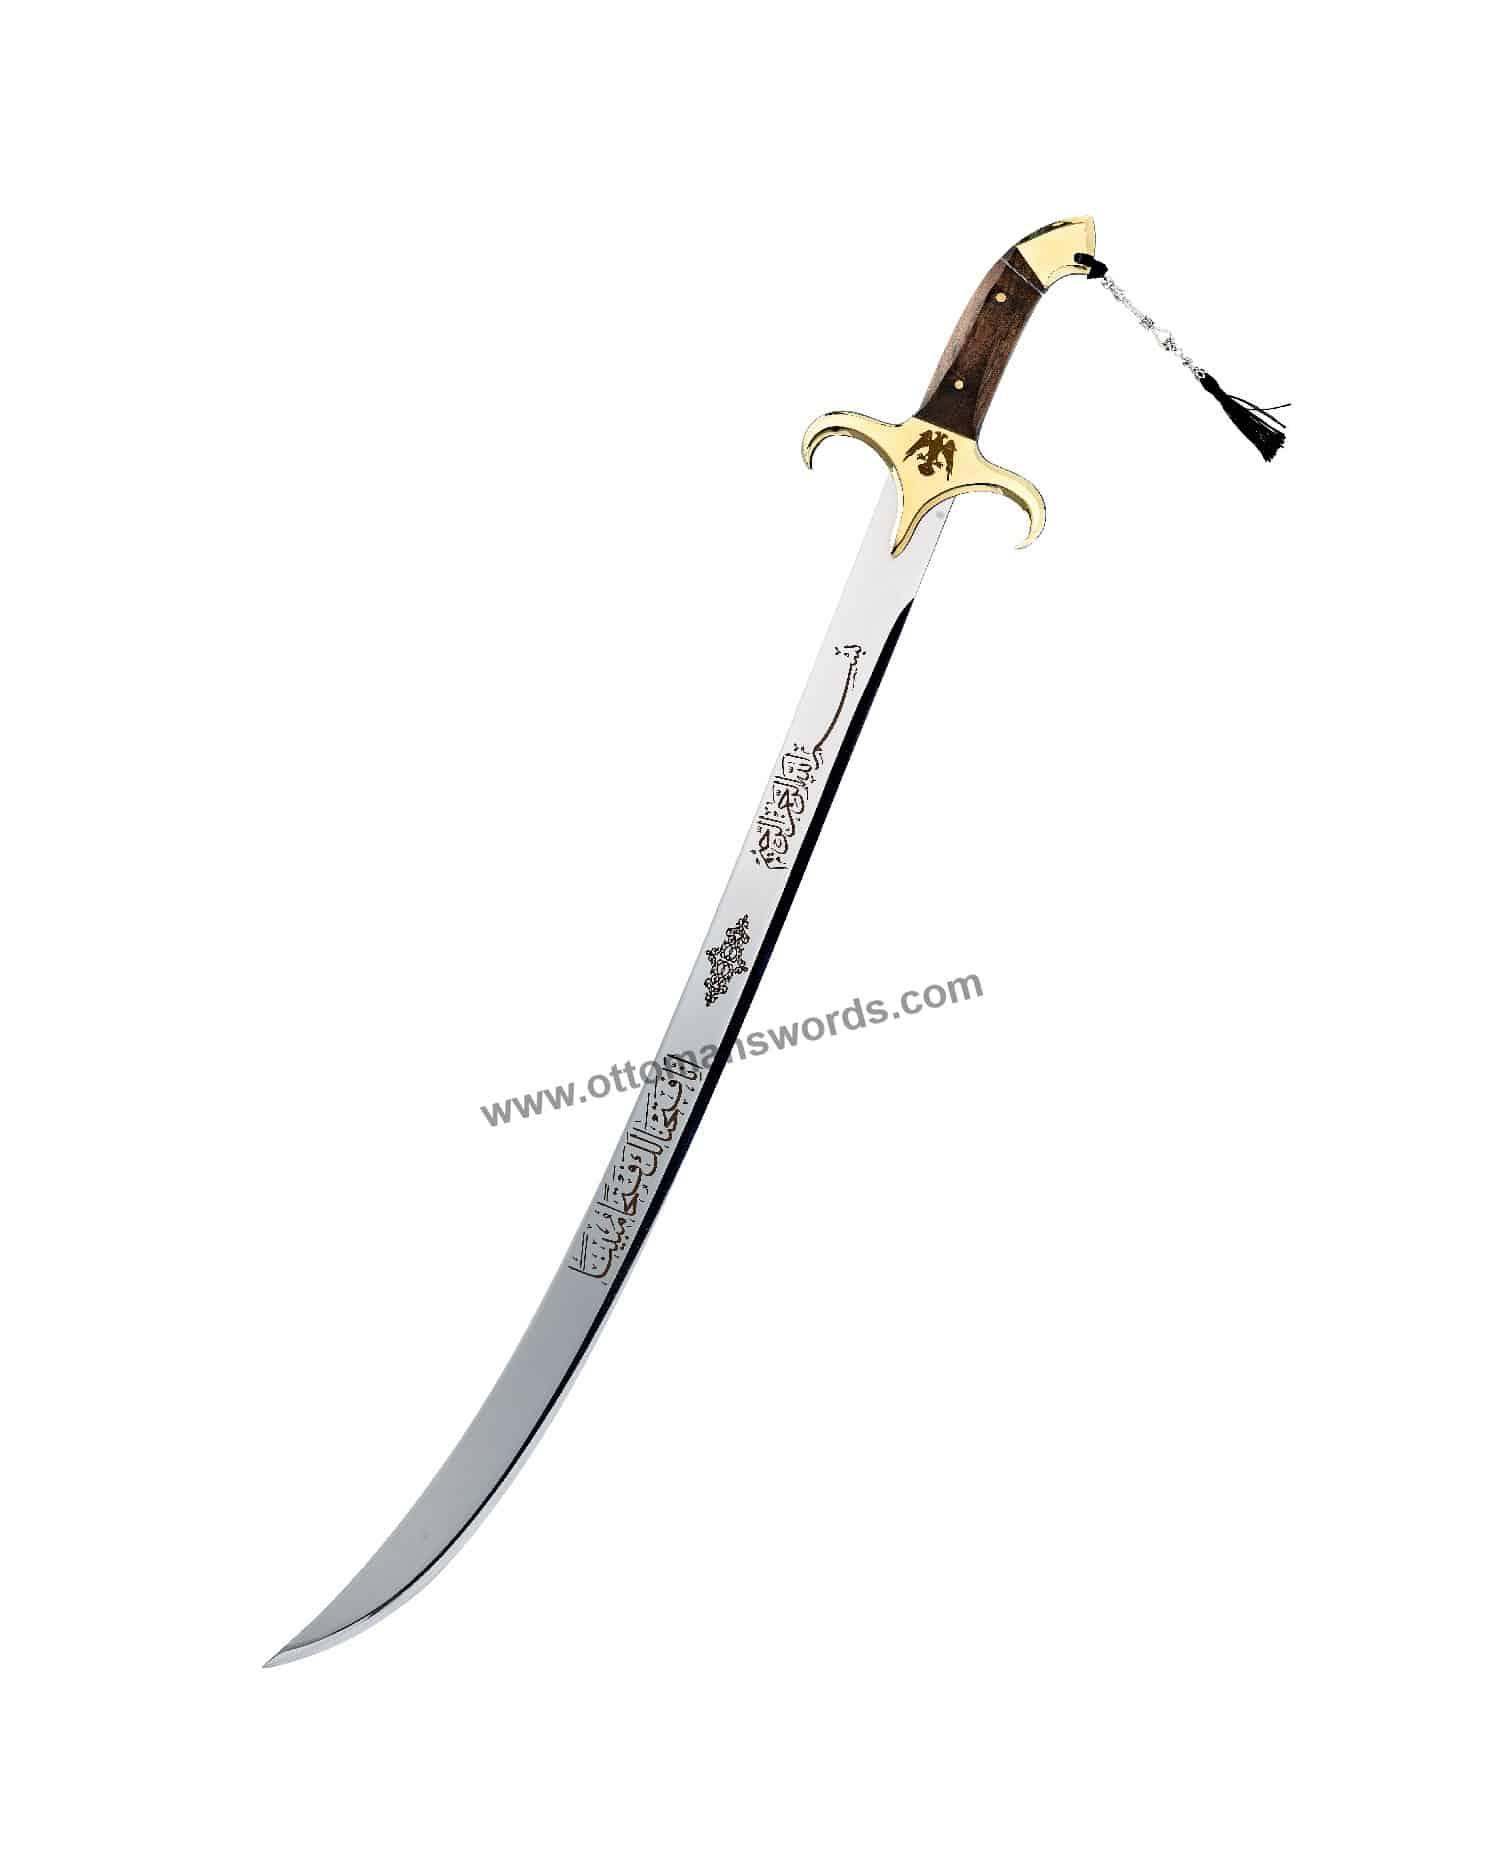 Uyanis Seljuks Sword (1)